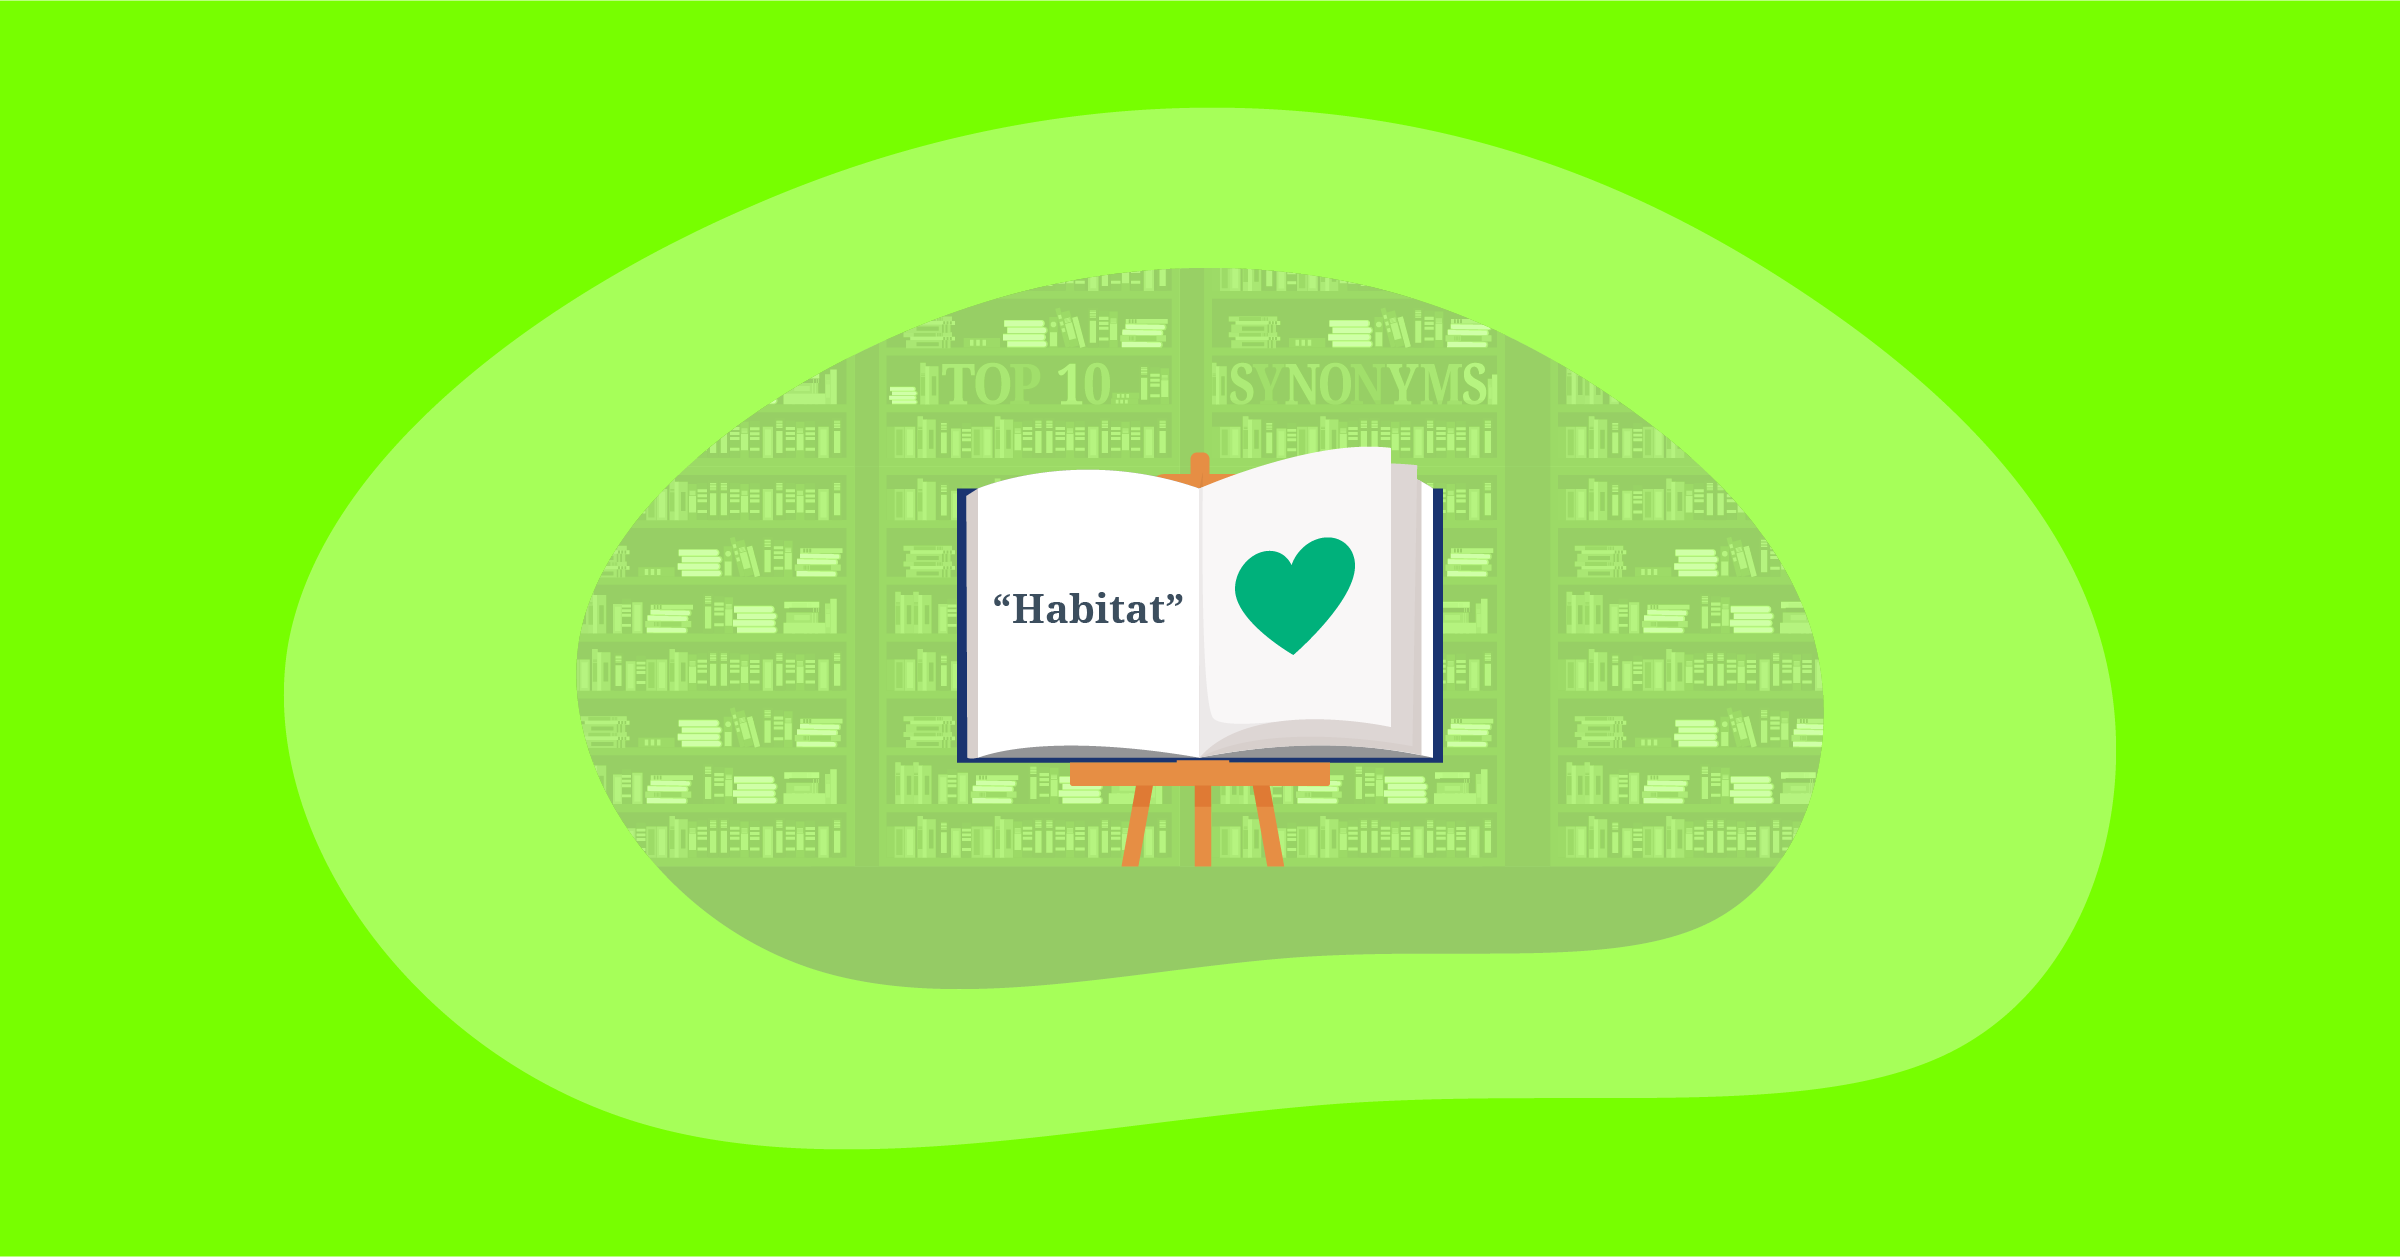 Illustration for top 10 positive impactful words for "Habitat"